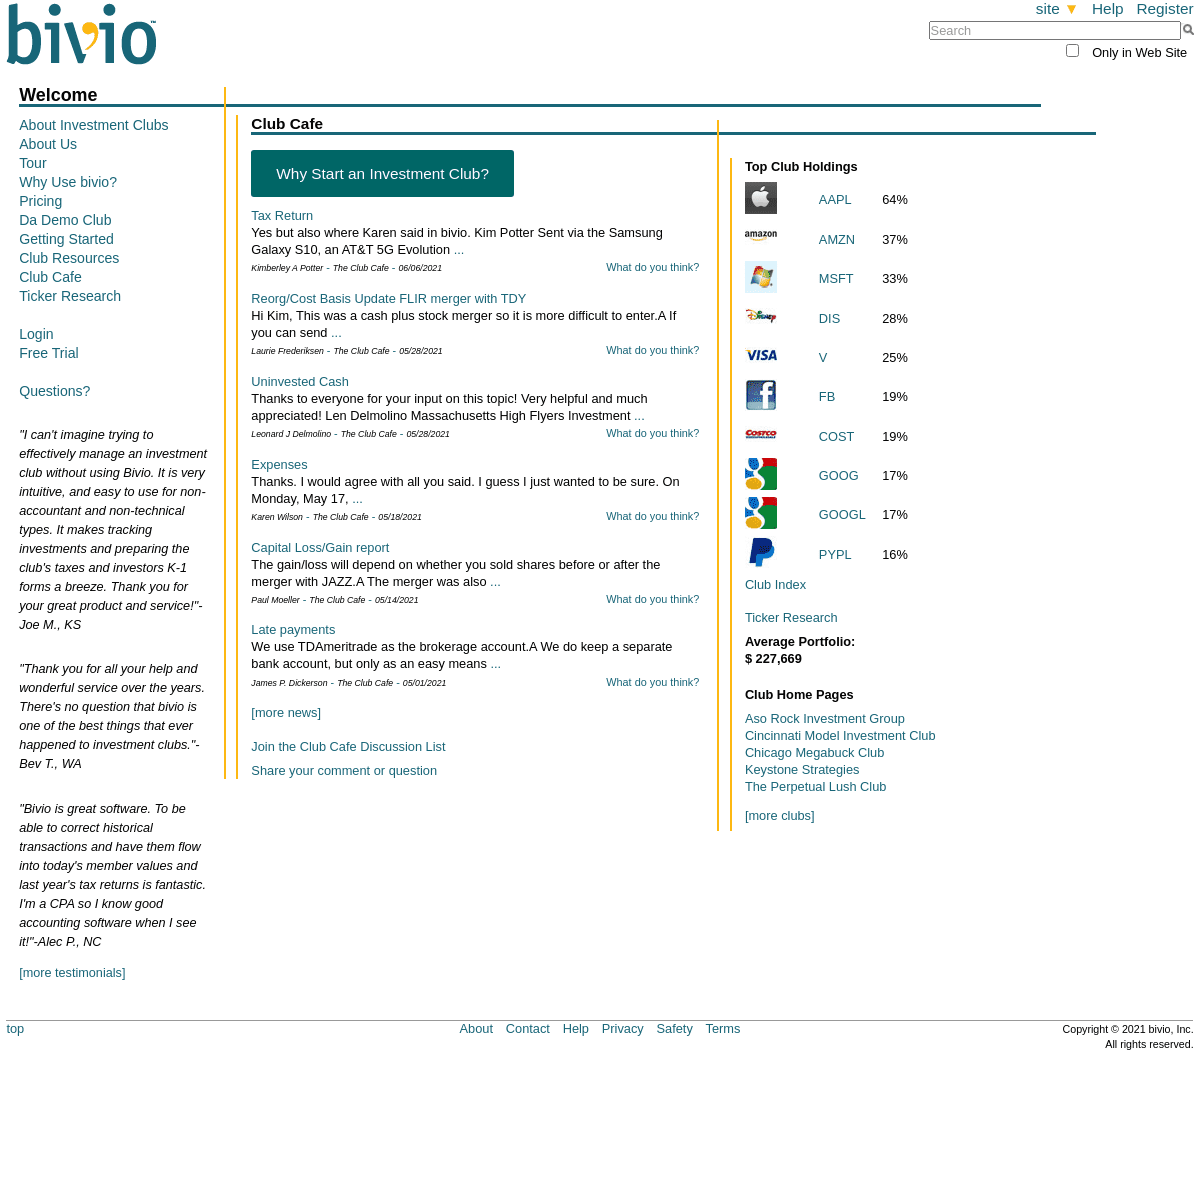 A complete backup of https://bivio.com